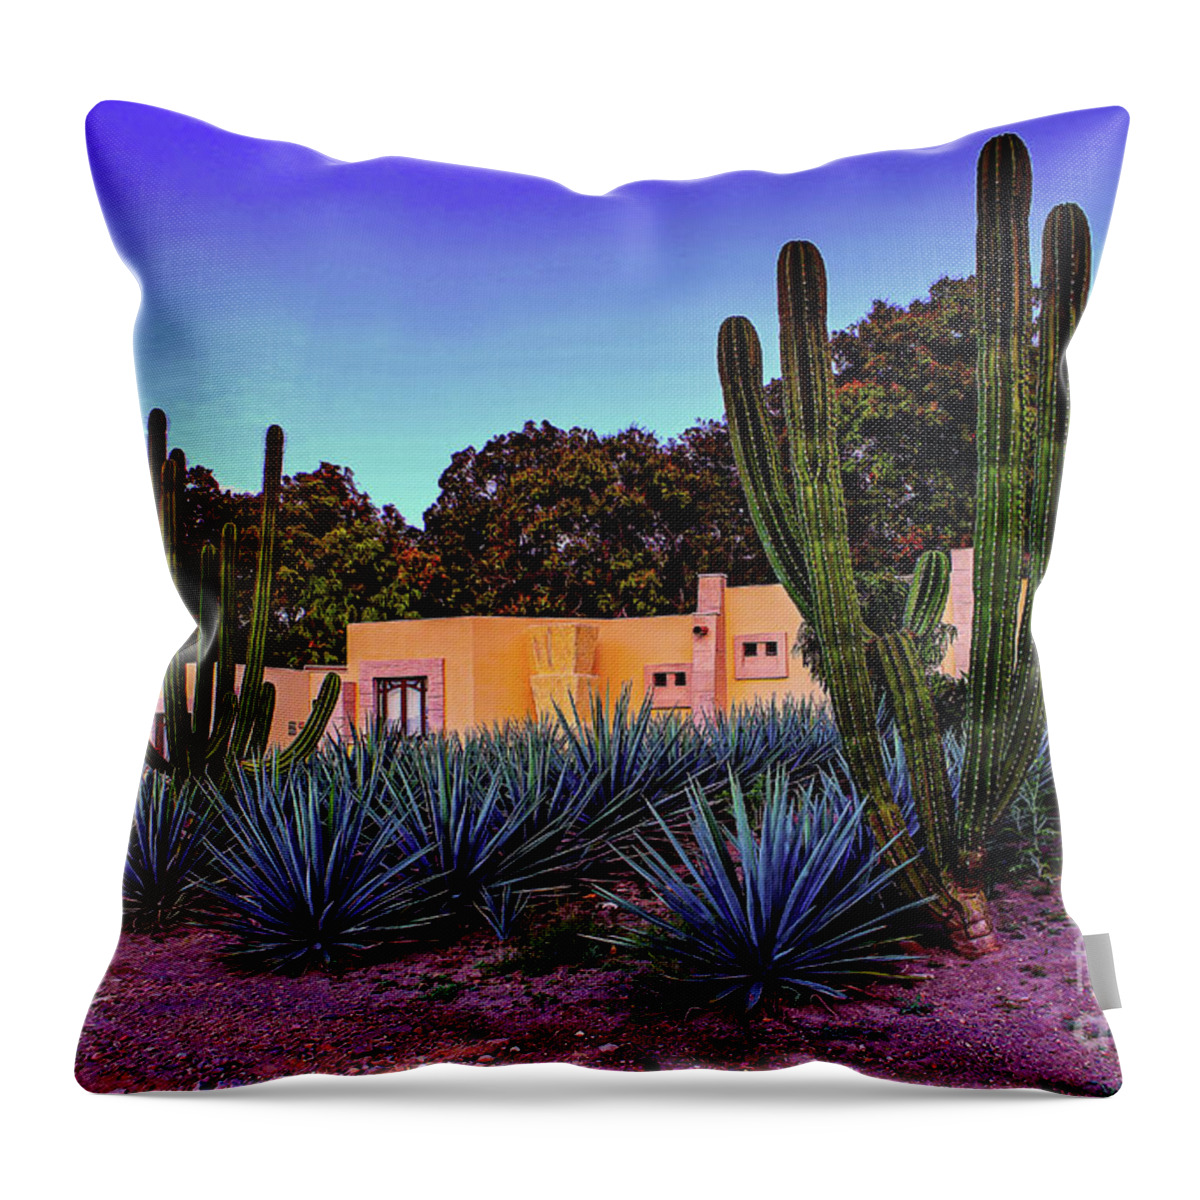 Hacienda Throw Pillow featuring the digital art La Hacienda in Tequila #1 by Marisol VB